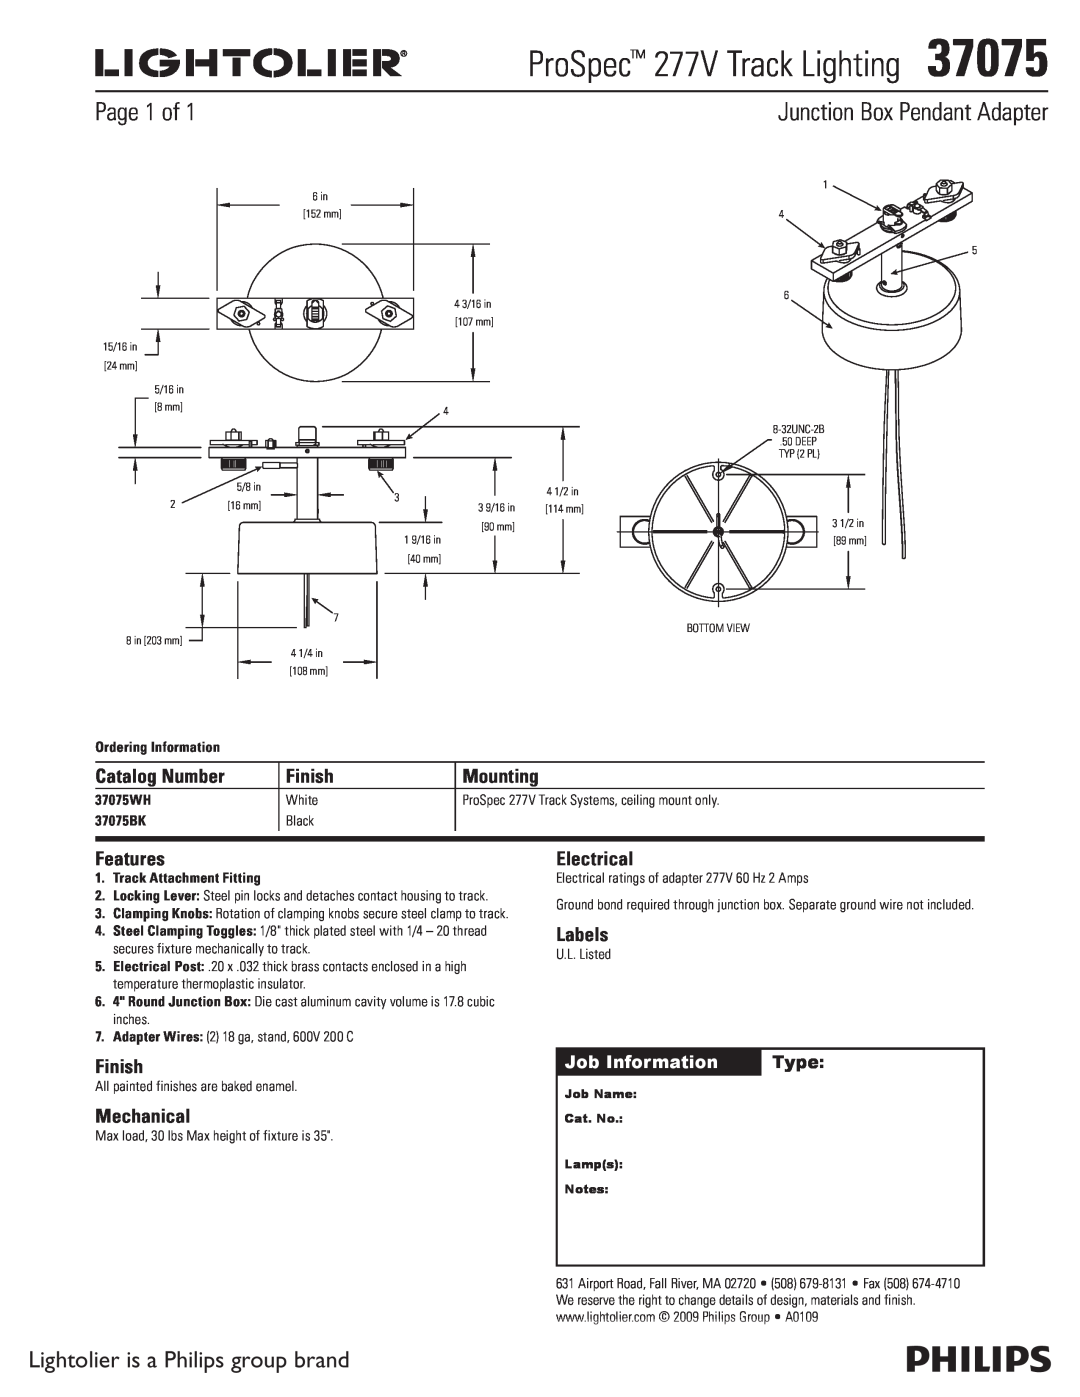 Lightolier manual ProSpec 277V Track Lighting37075, Junction Box Pendant Adapter, Page 1 of, Catalog Number, Finish 